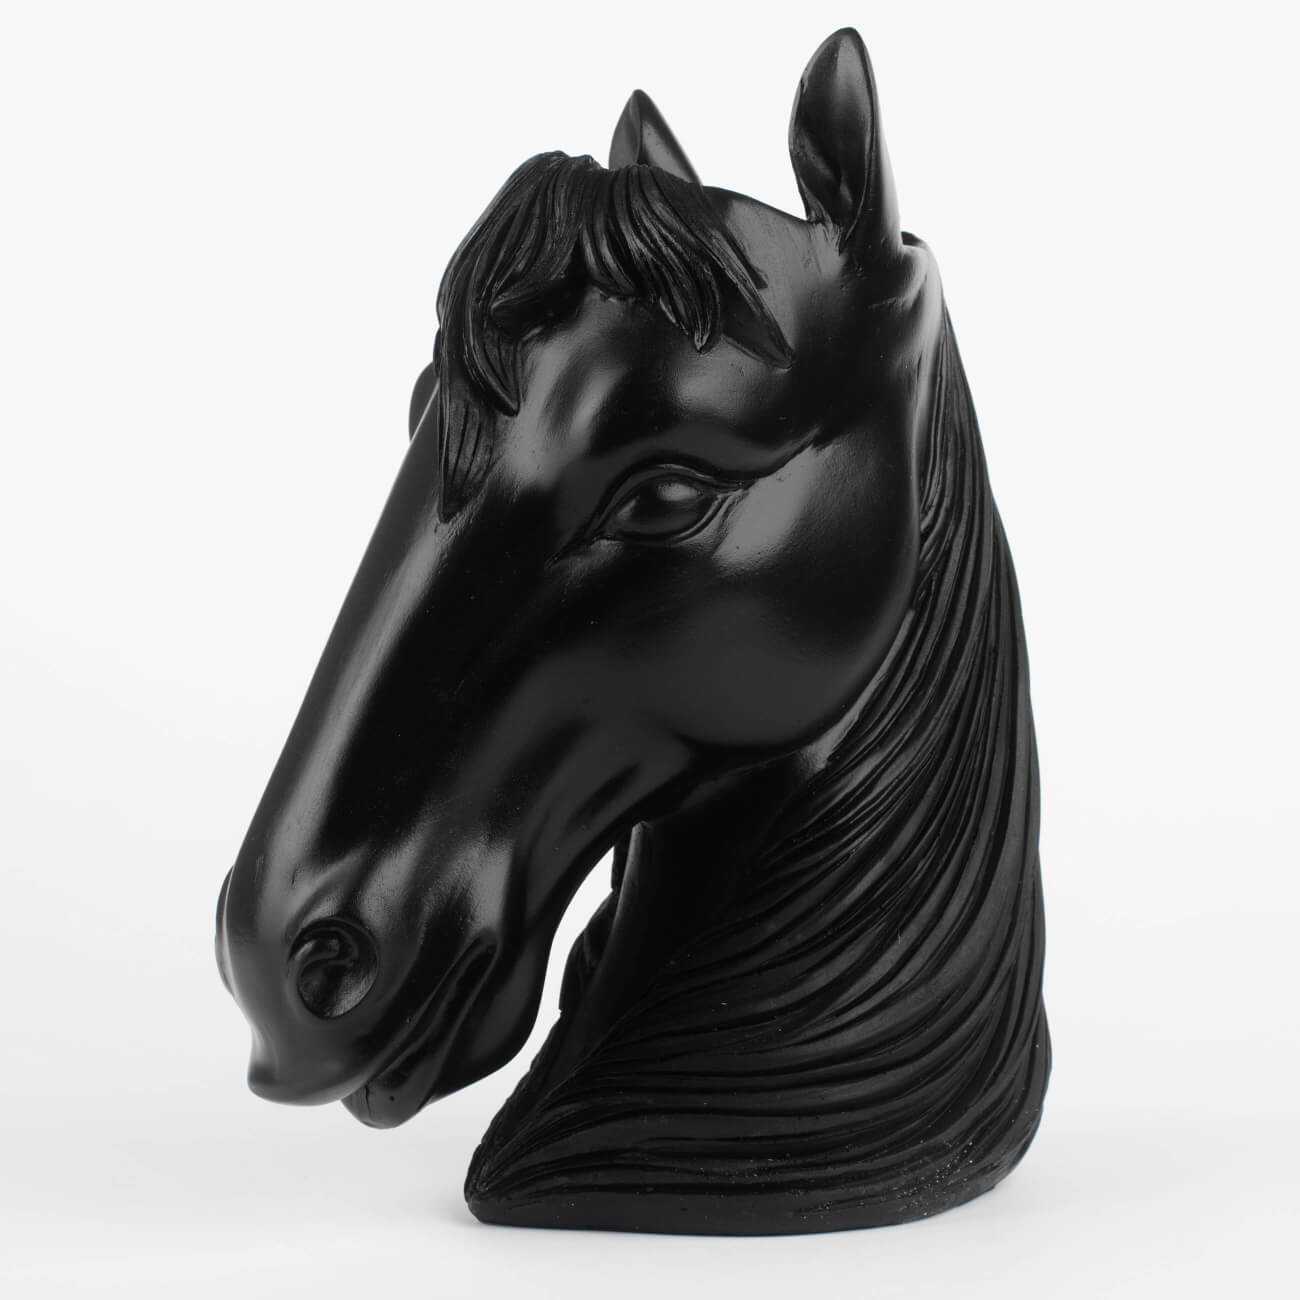 Decorative vase, 25 cm, polyresin, black, Horse head, Horse изображение № 1